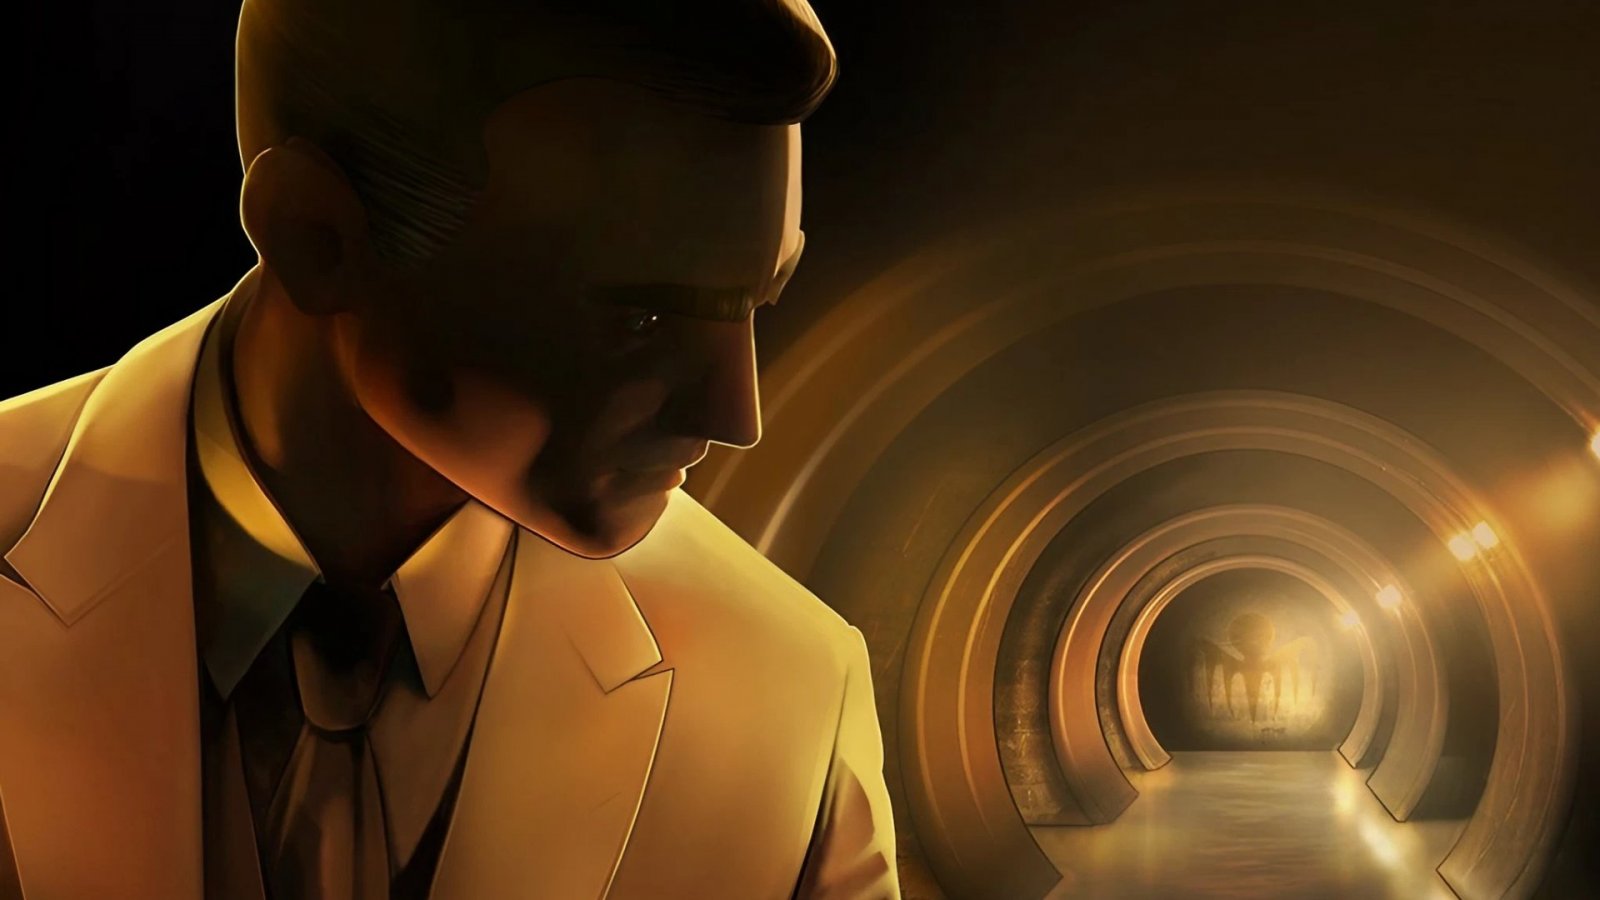 Cypher 007, James Bond arriva su Apple Arcade con un action stealth: ecco il trailer